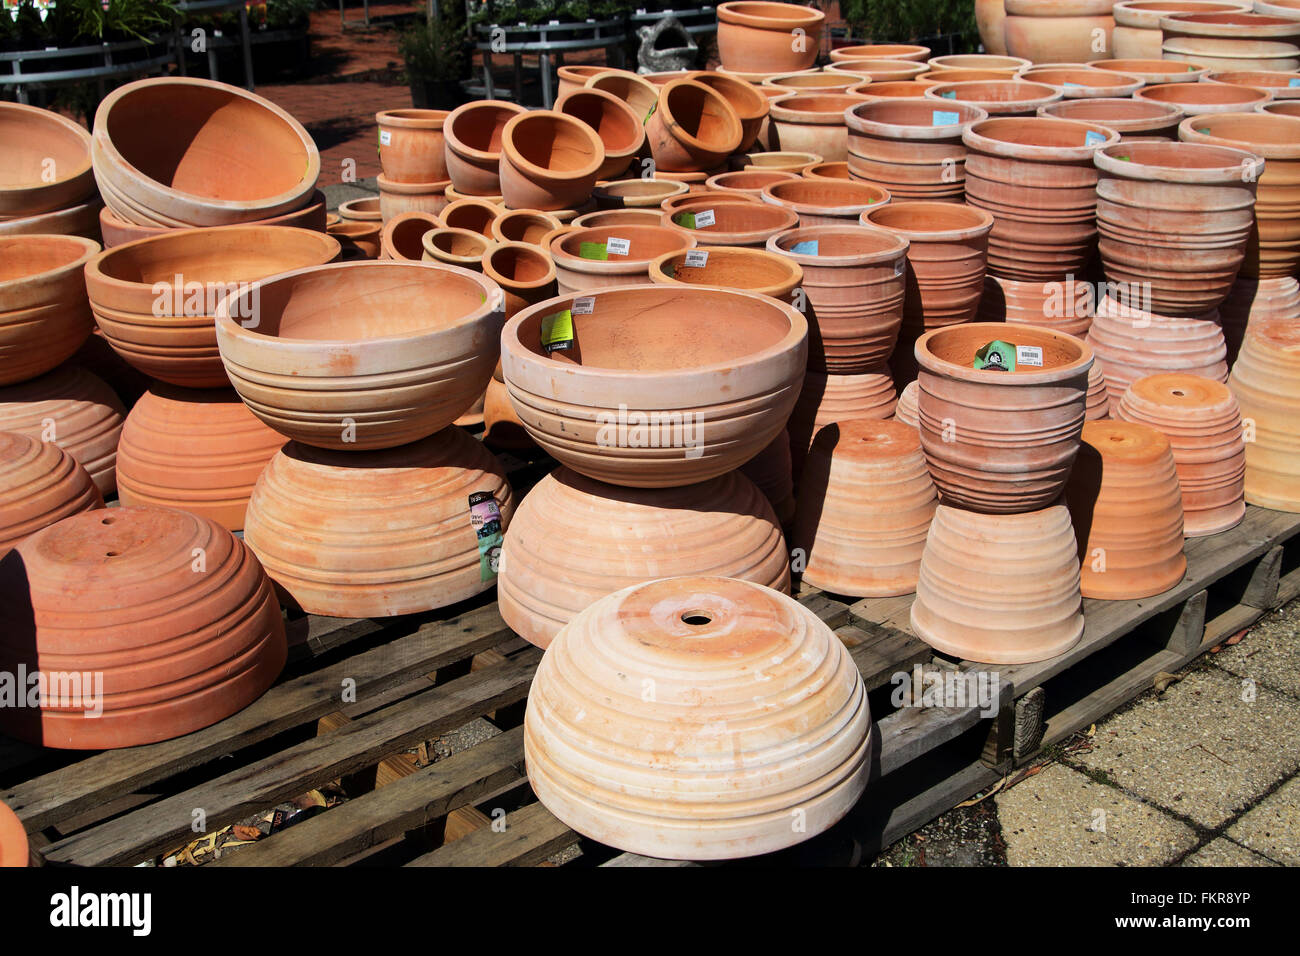 Terracotta Pots For Sale At Garden Nursery Stock Photo 98242250